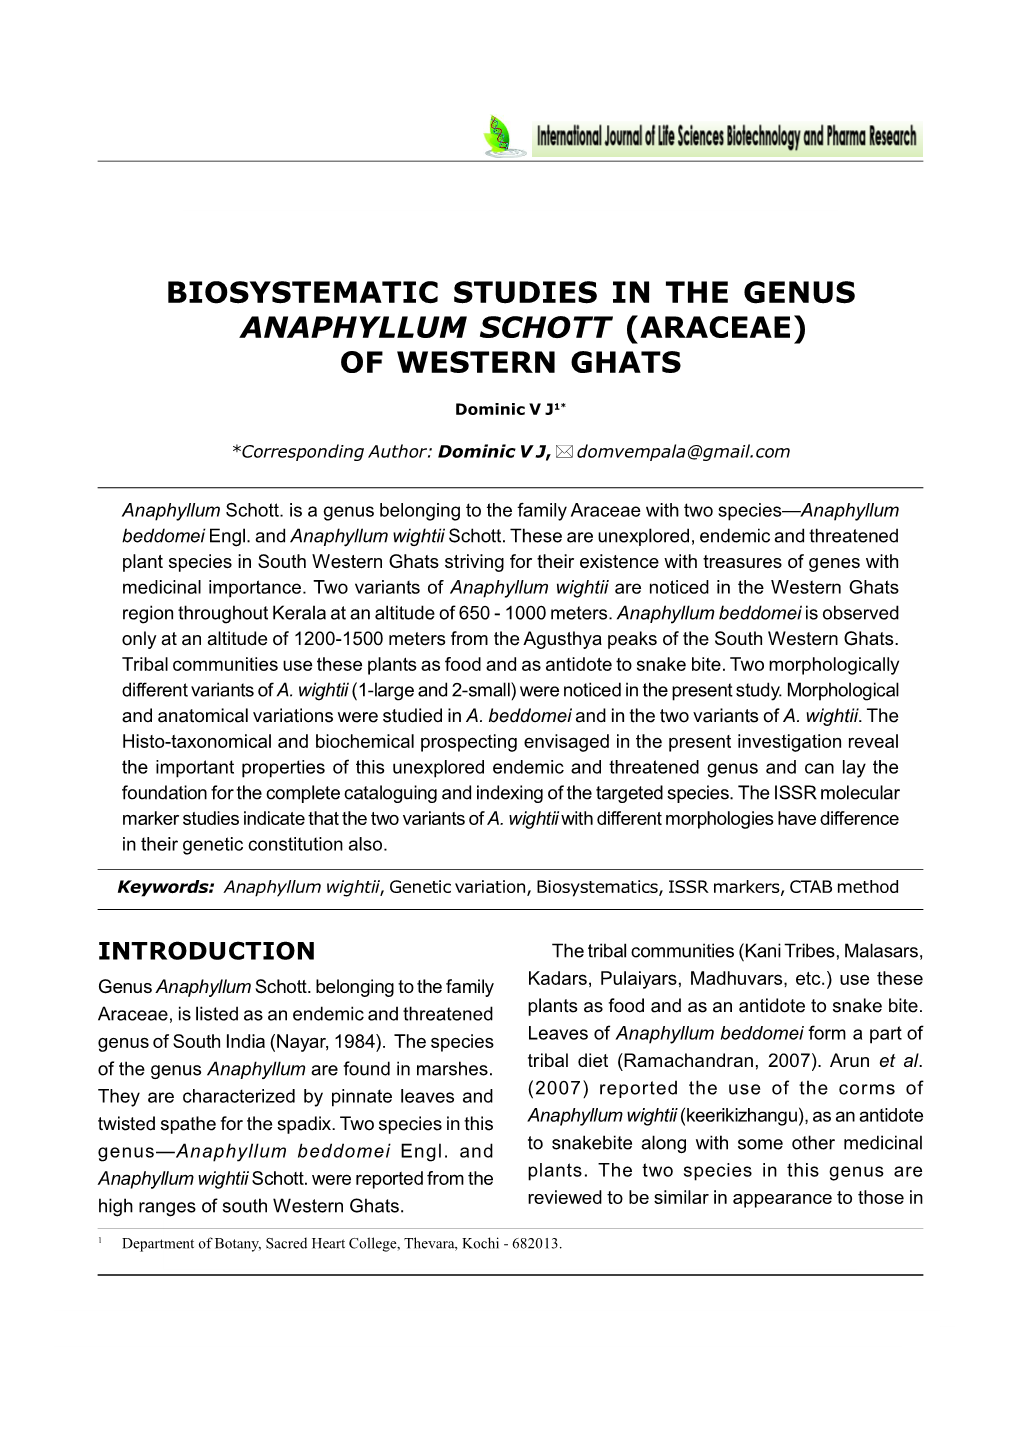 Biosystematic Studies in the Genus Anaphyllum Schott (Araceae) of Western Ghats